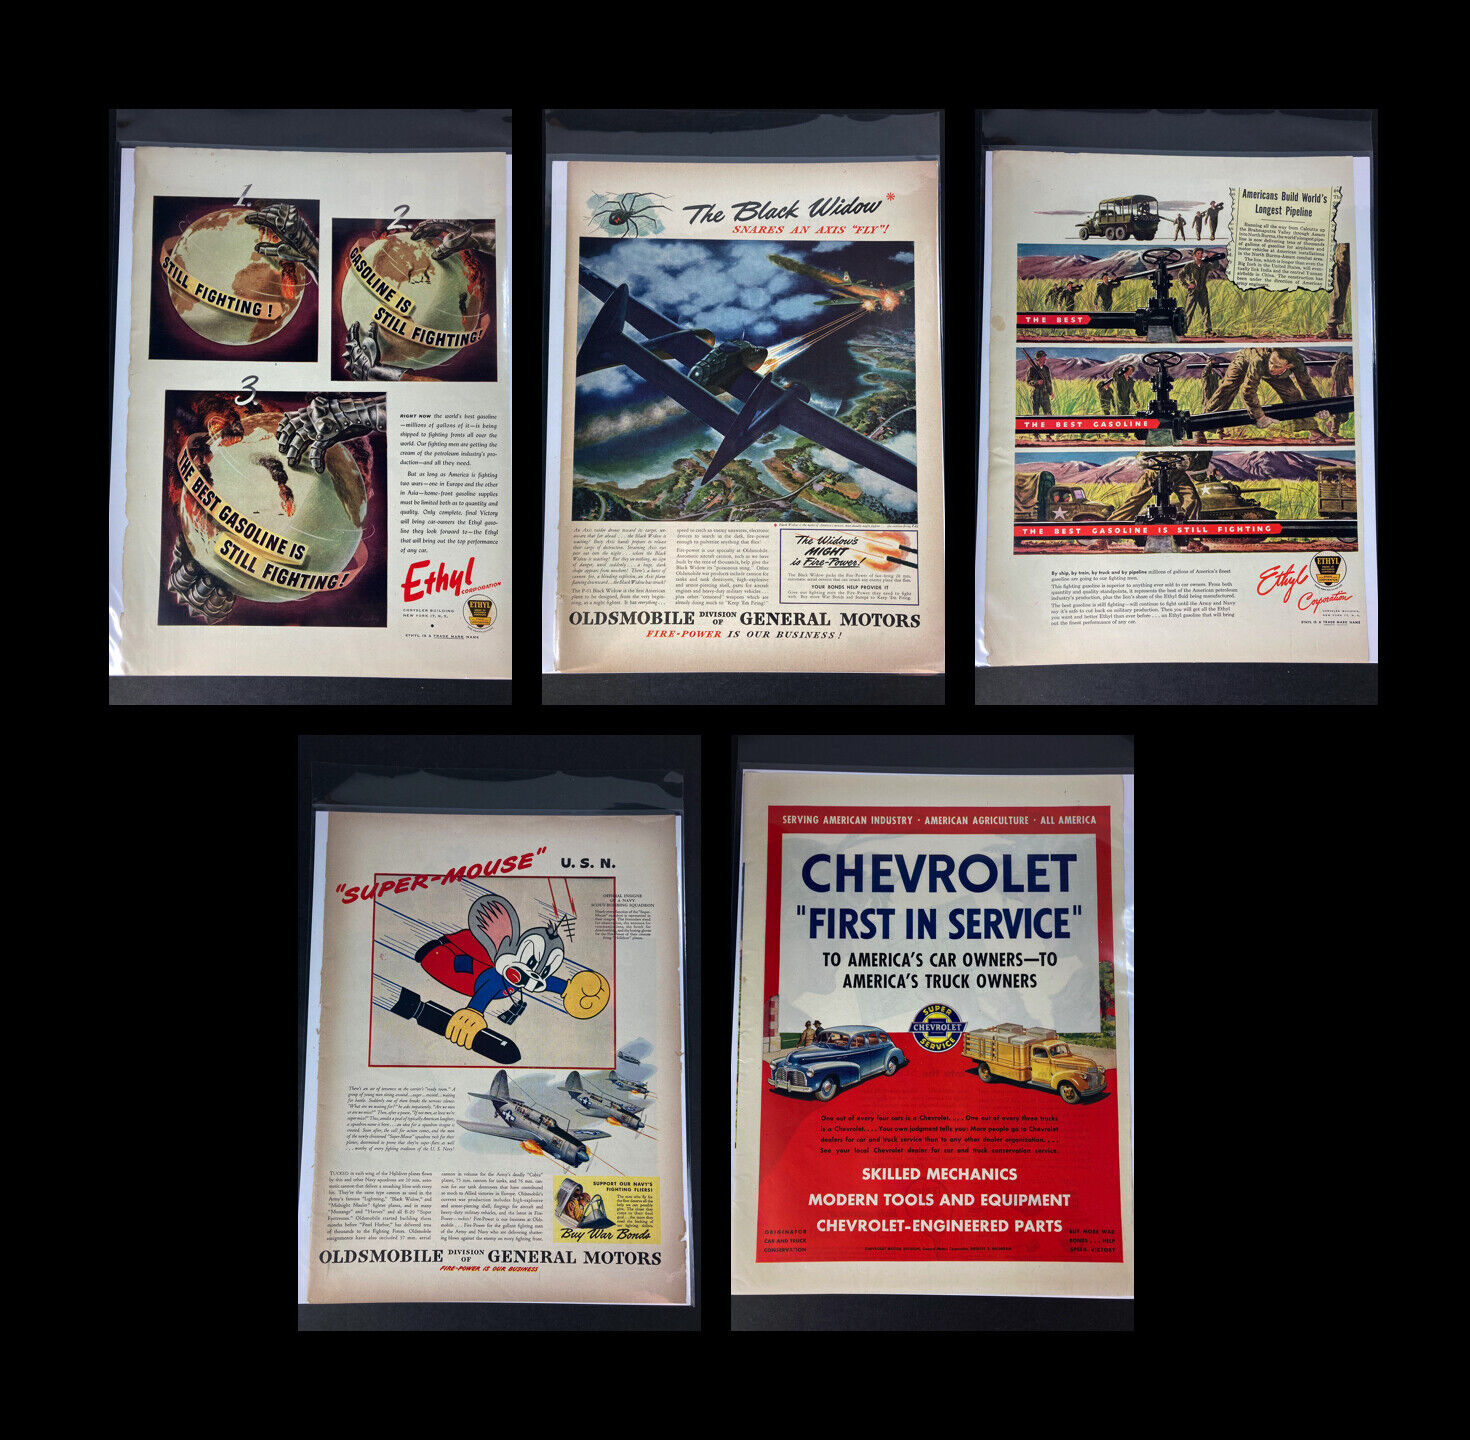 Lot of 5 Vintage Automobilia Life Magazine Ads, War Ethyl GM Chevrolet 1944-45